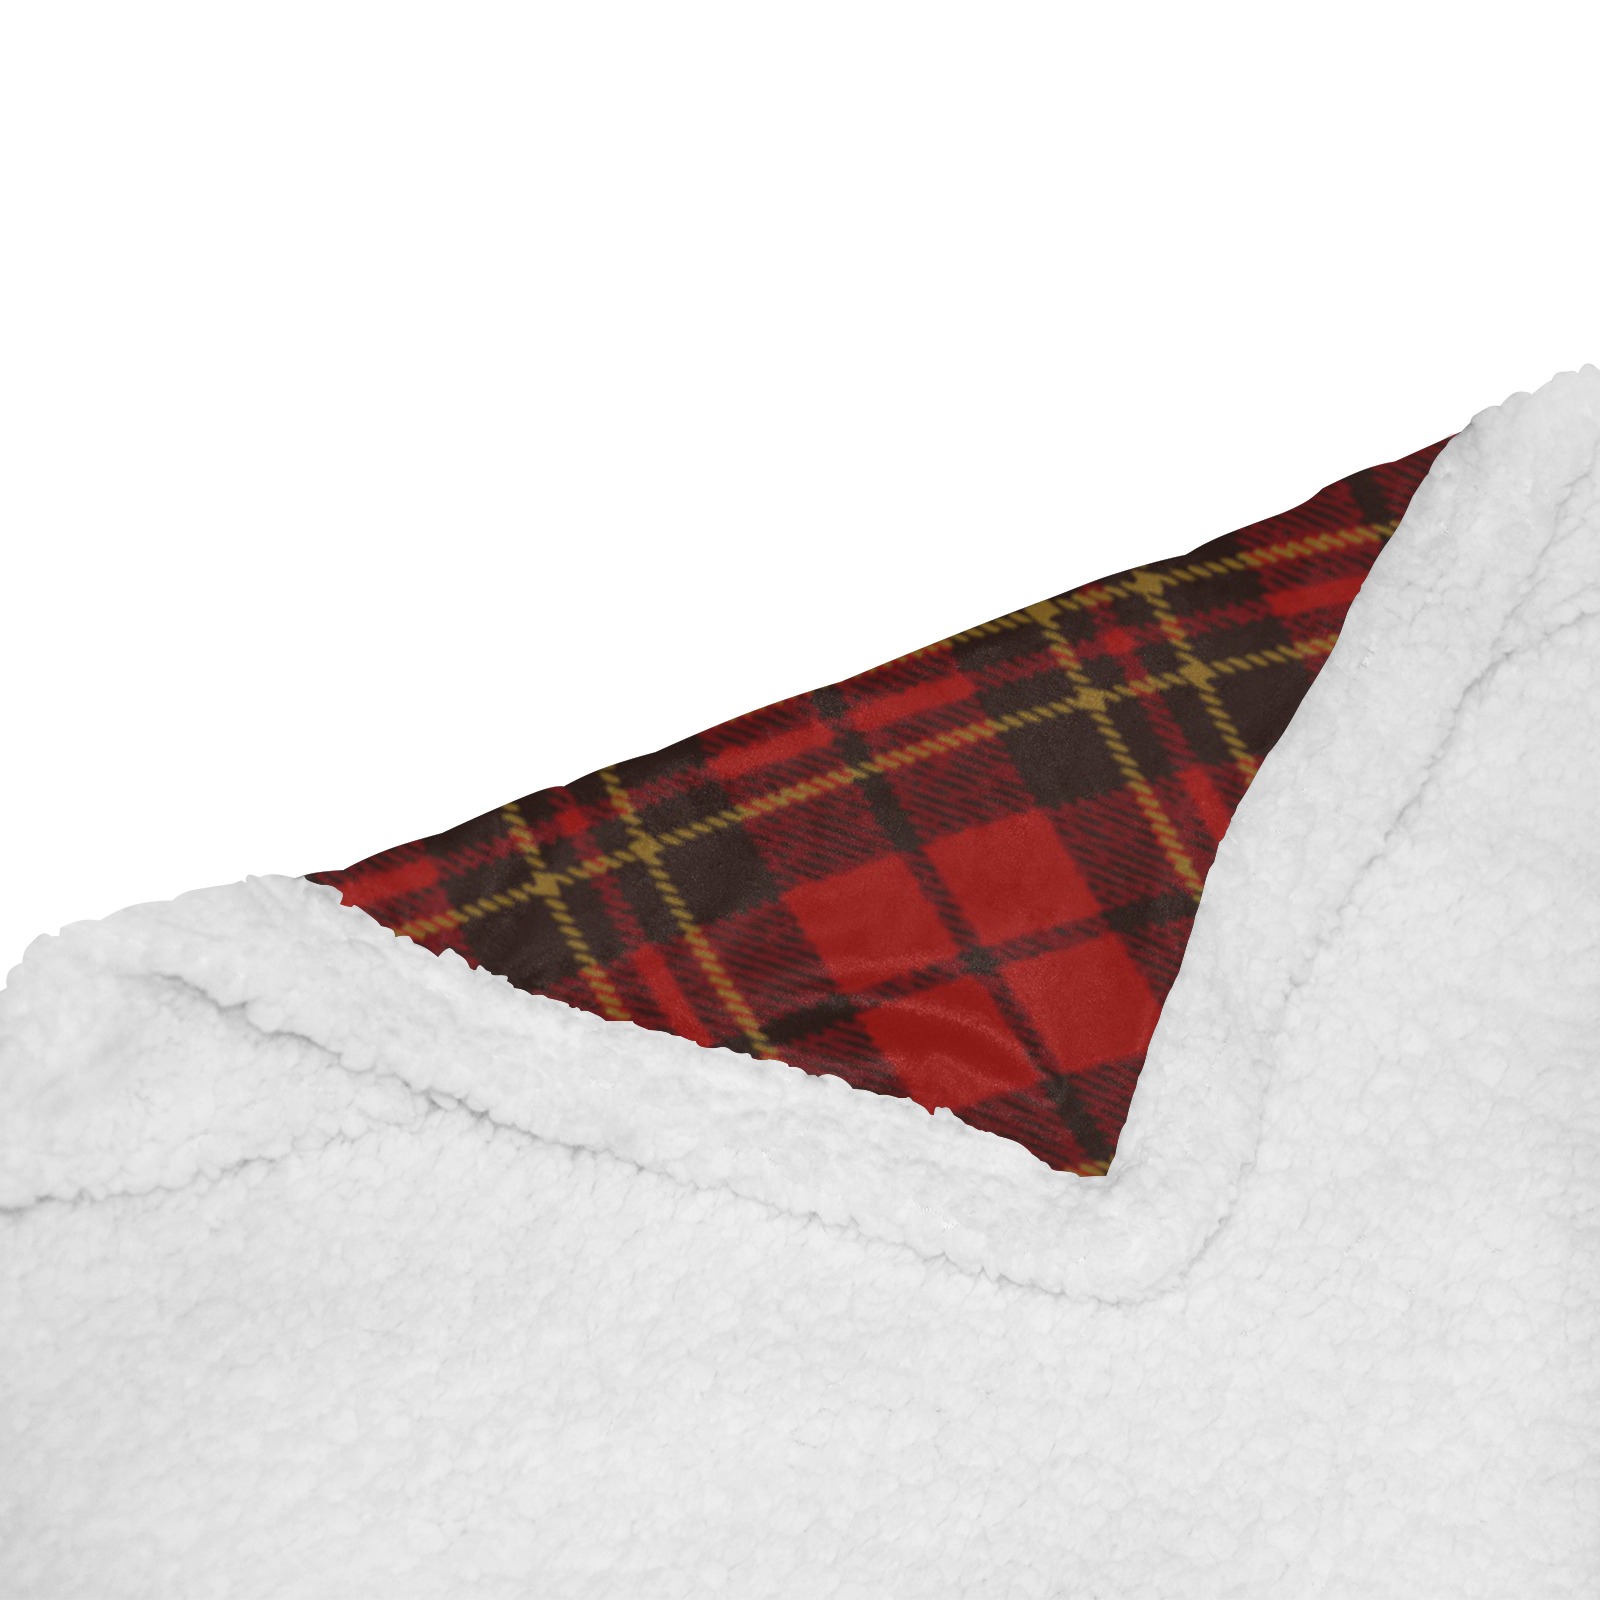 Red tartan plaid winter Christmas pattern holidays Double Layer Short Plush Blanket 50"x60"